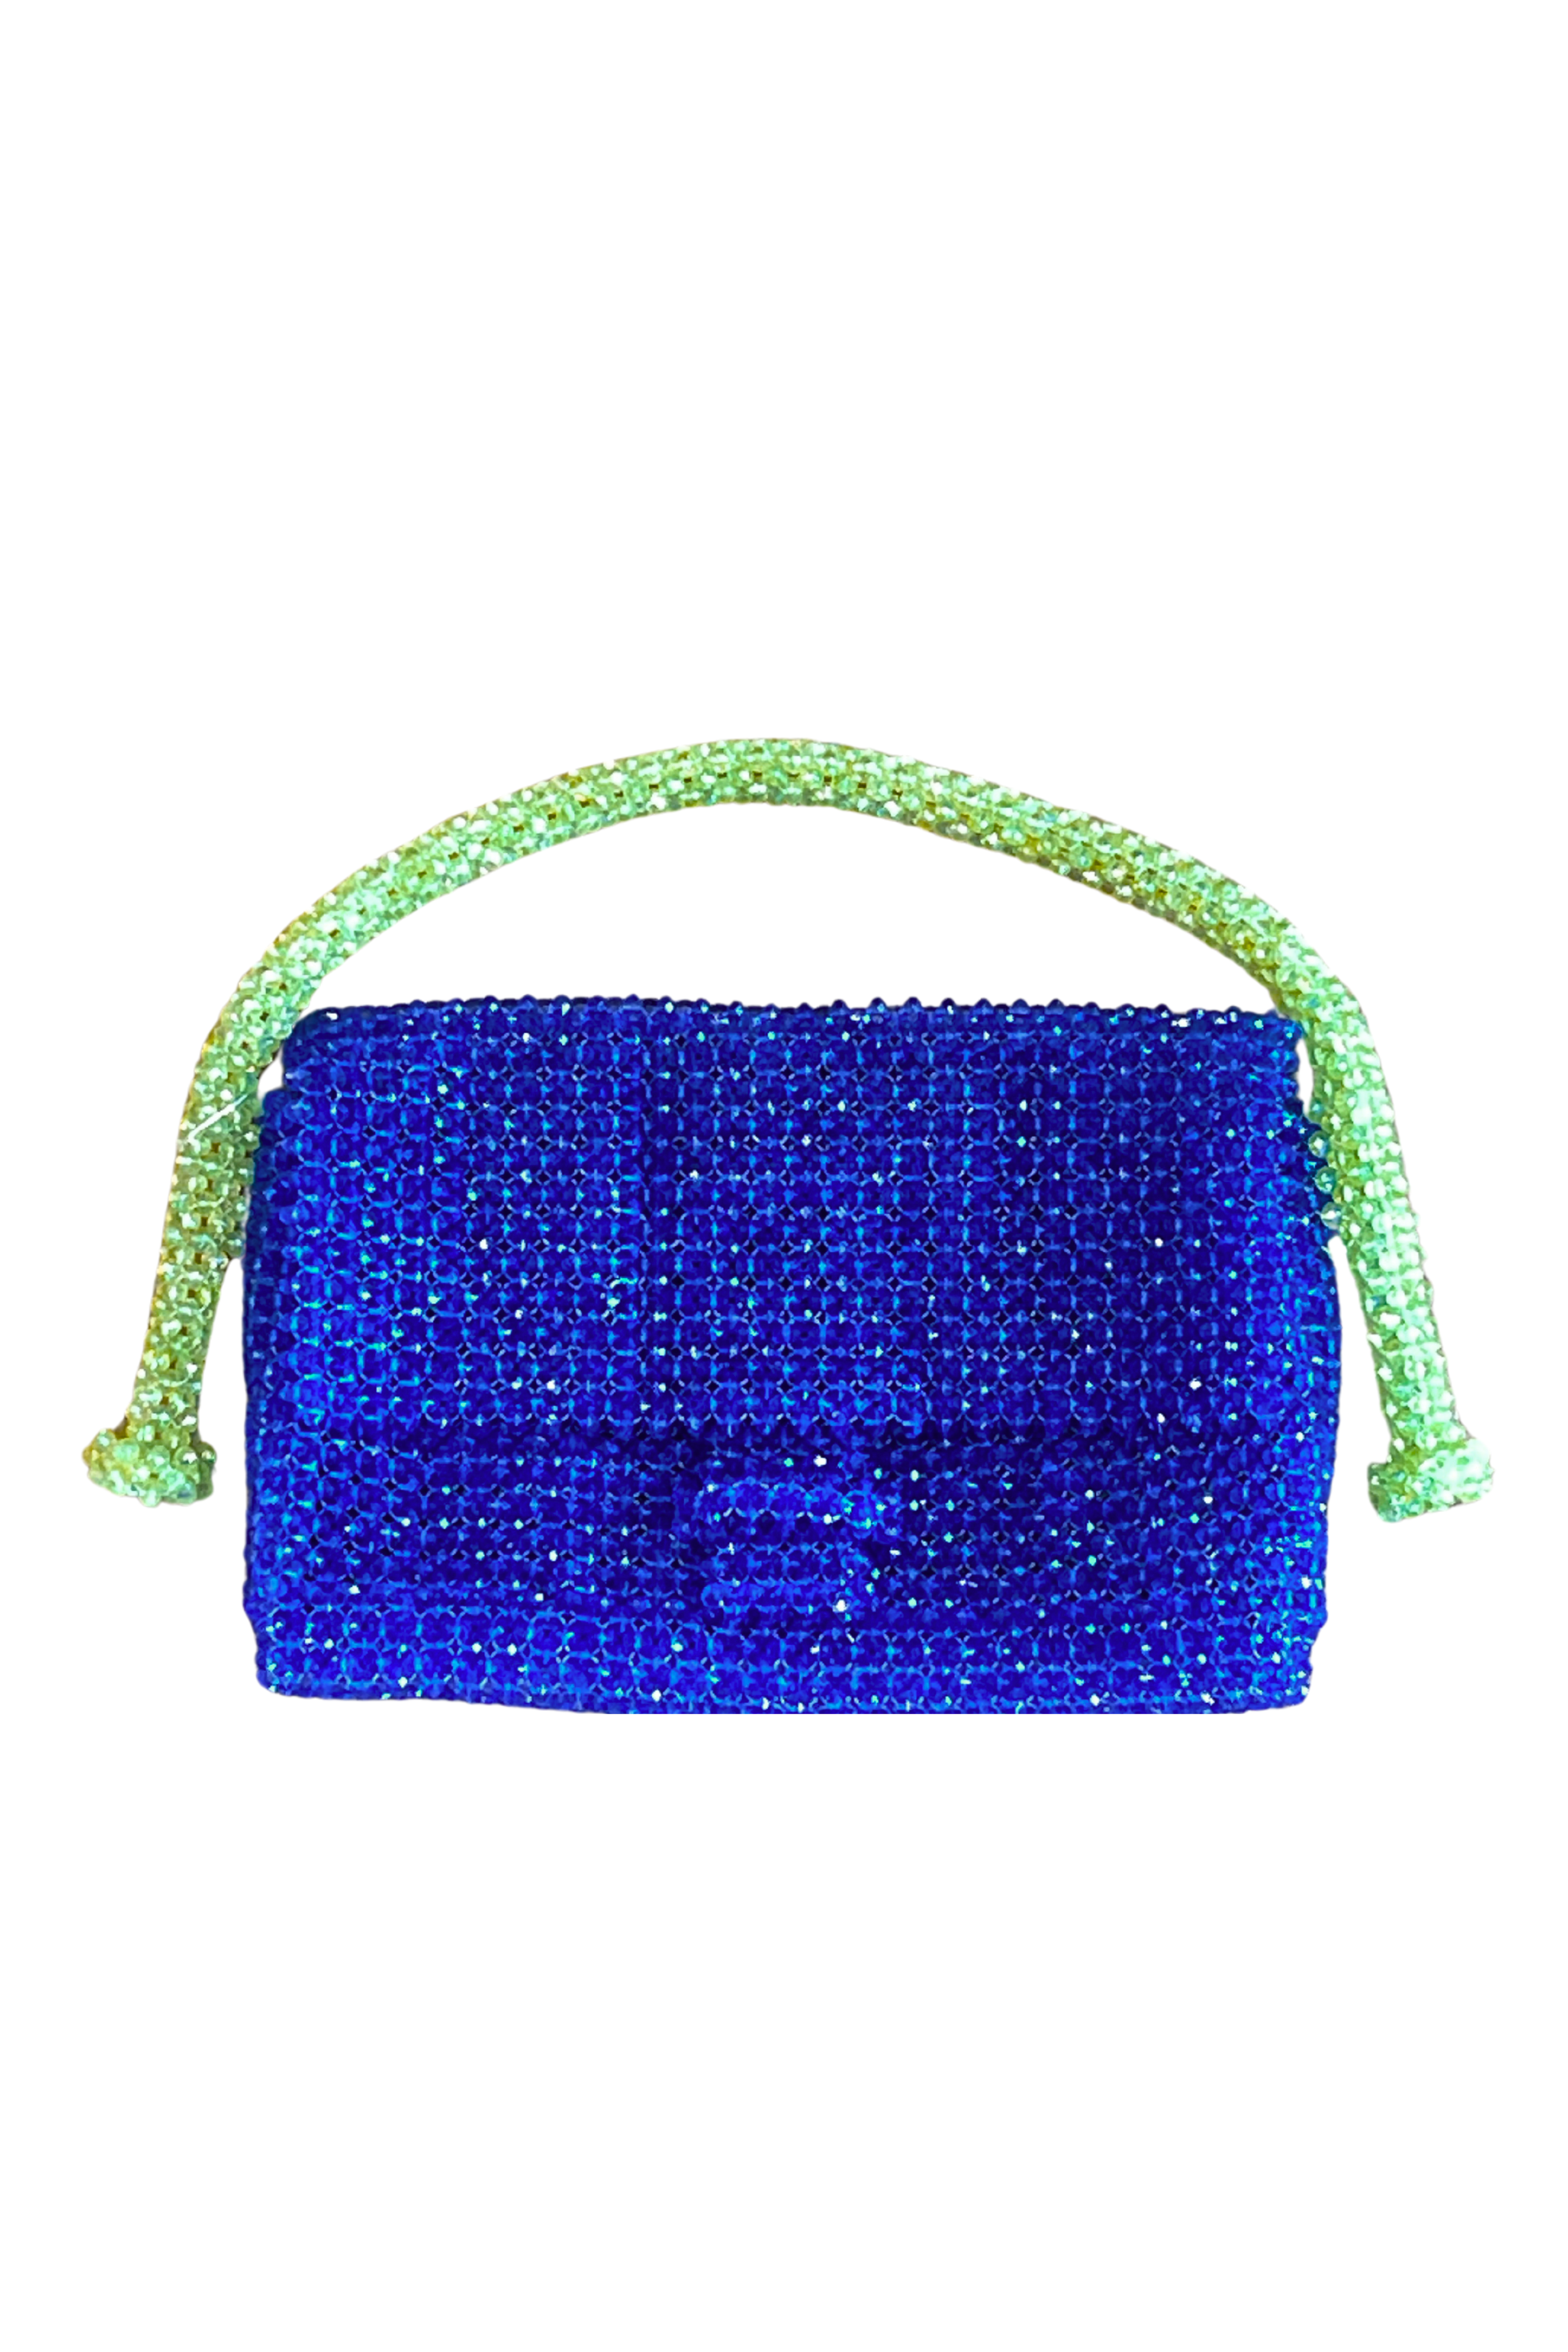 LISA FOLAWIYO Beaded Classic Handbag in Blue